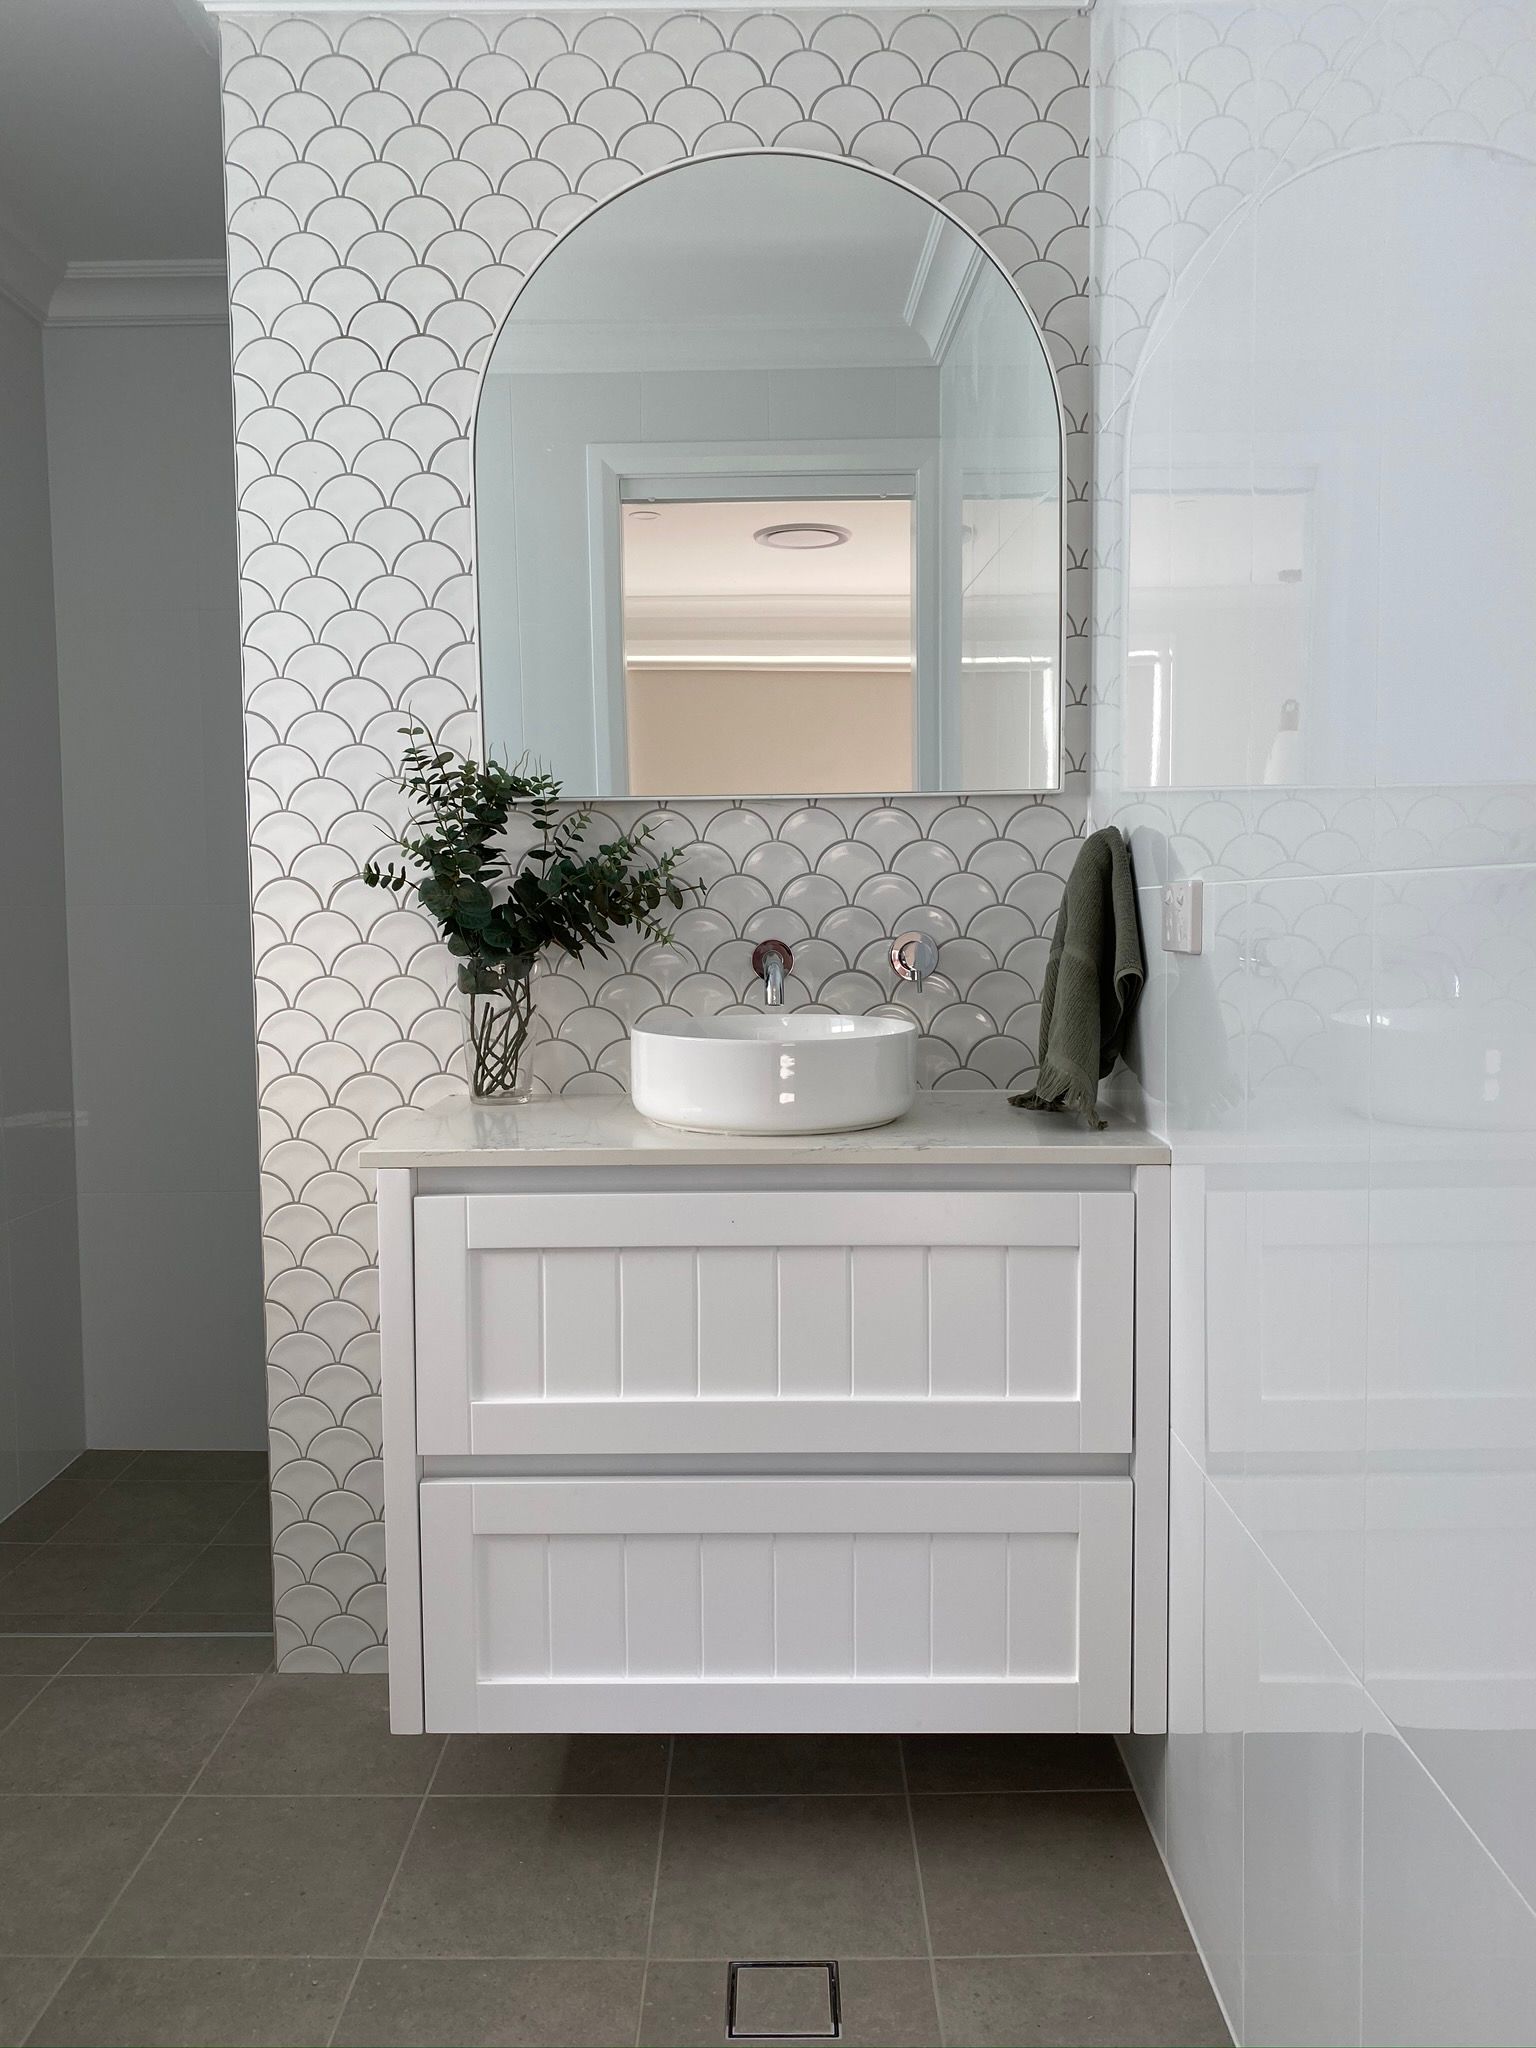 Bathroom Sink Below The Mirror— Kitchen Renovations in Dubbo, QLD